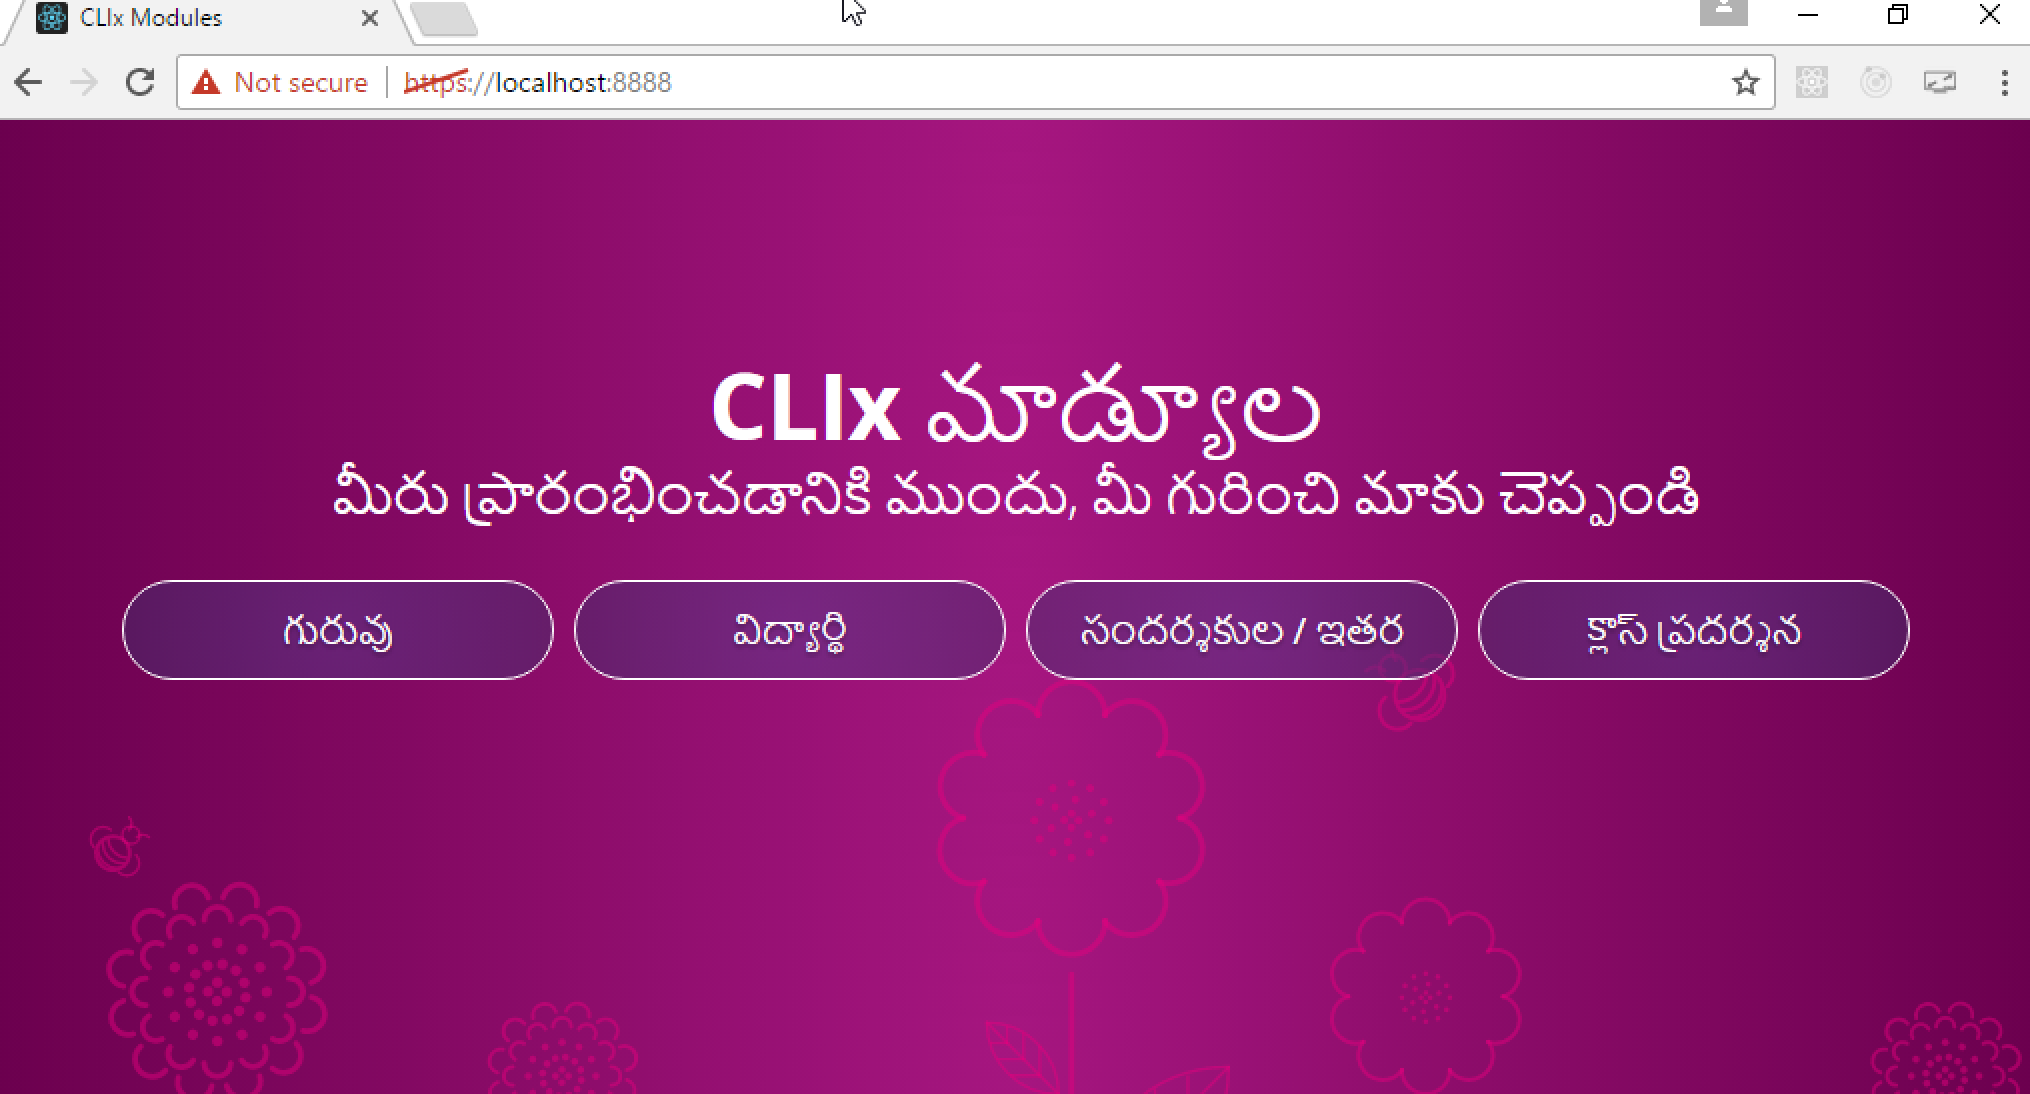 Unplatform user survey screen in Telugu